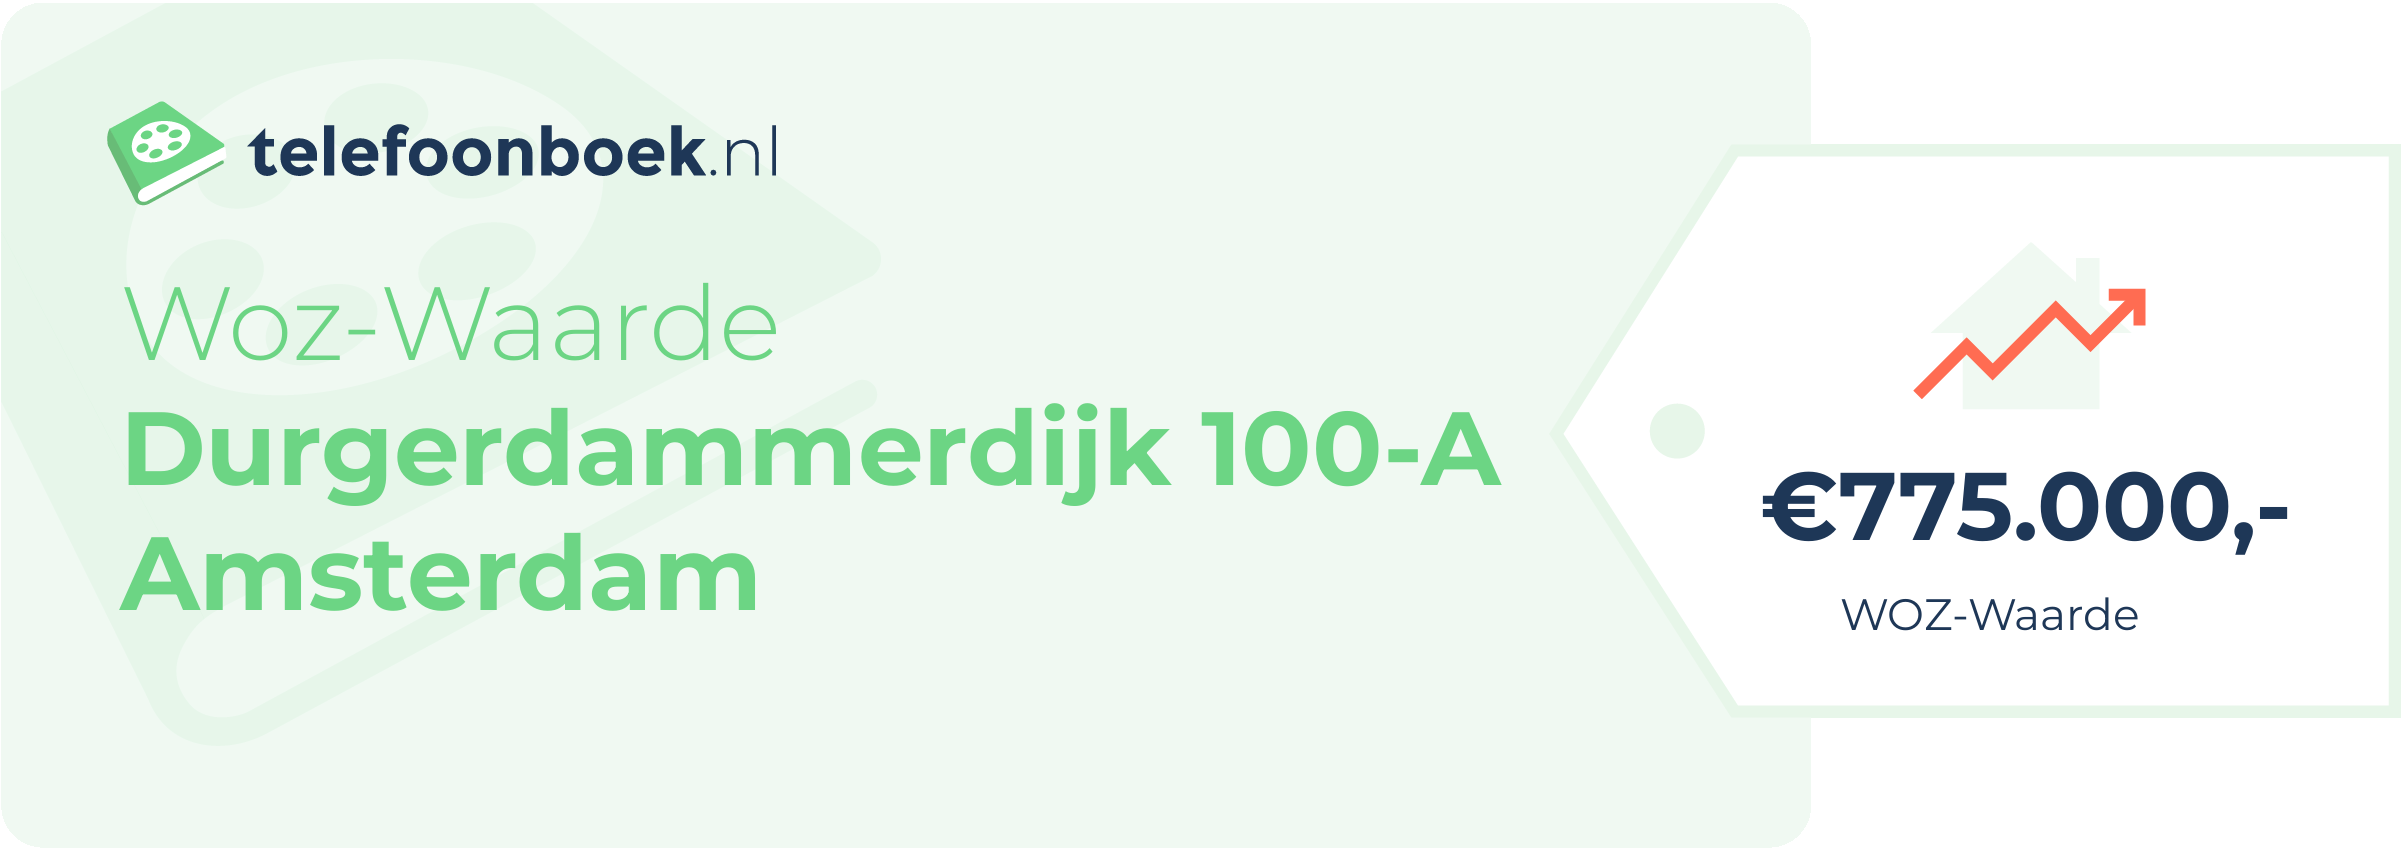 WOZ-waarde Durgerdammerdijk 100-A Amsterdam